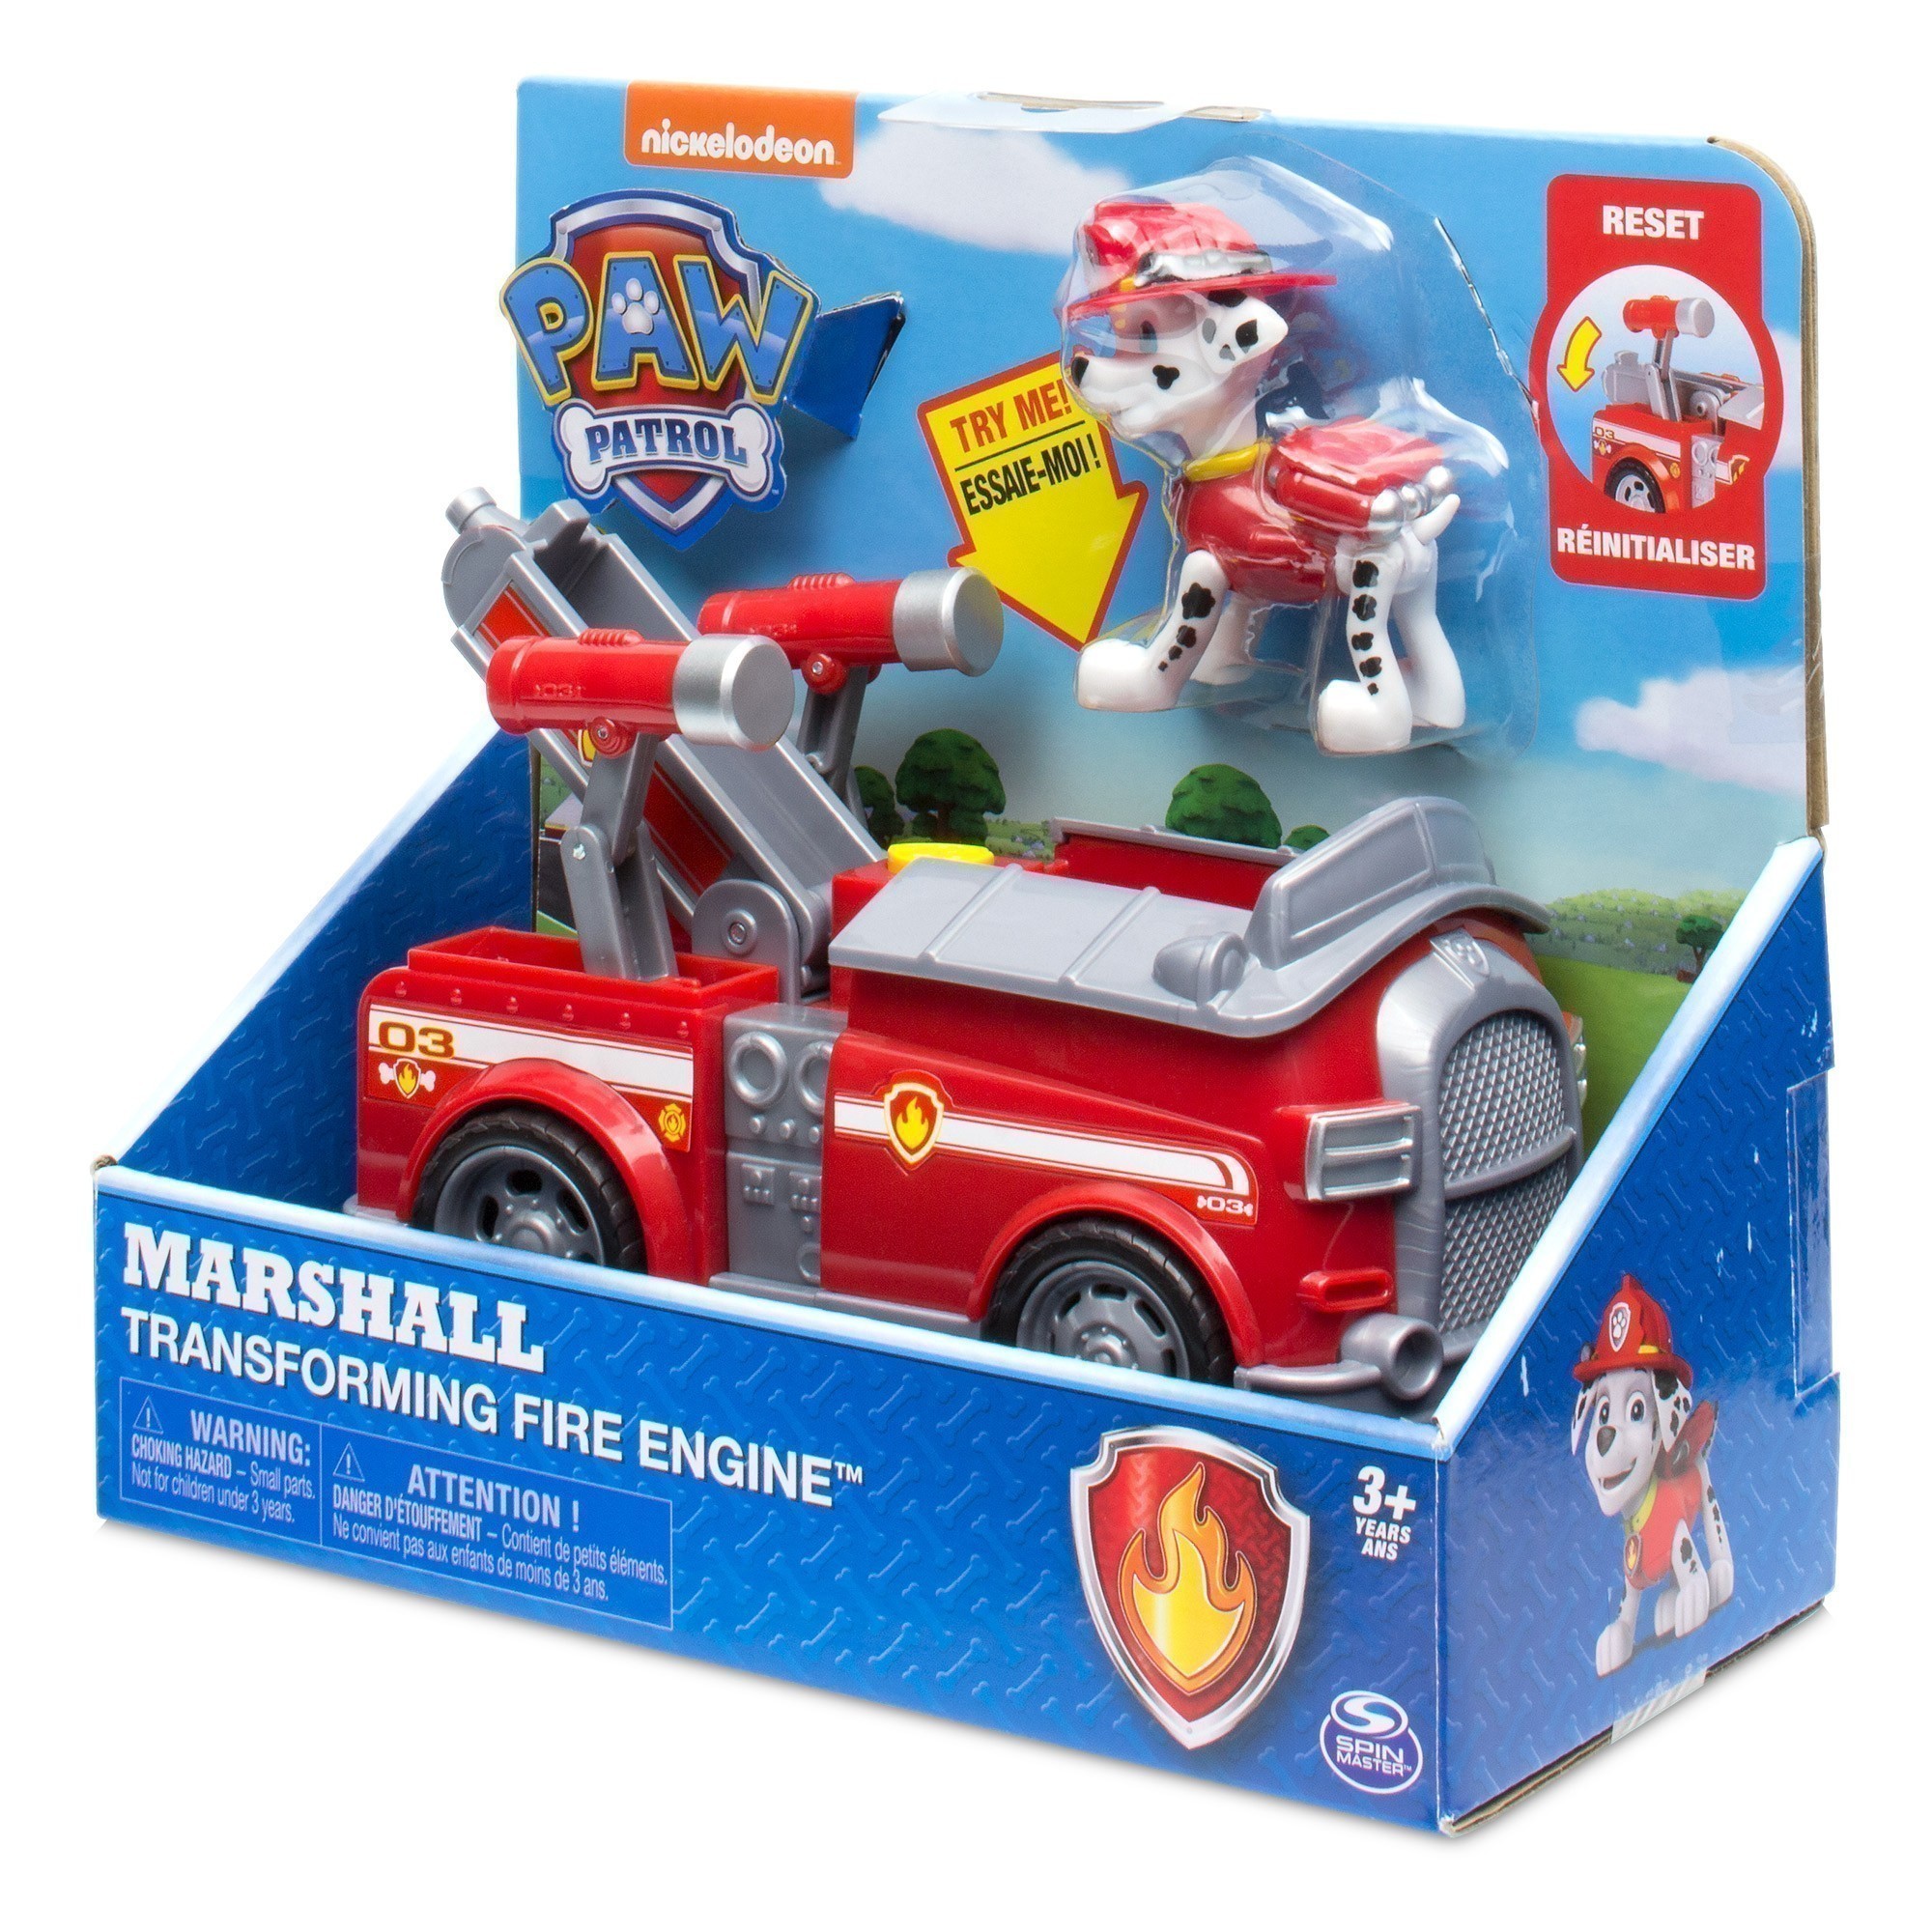 Nickelodeon - Paw Patrol - Marshall Transforming Fire Engine